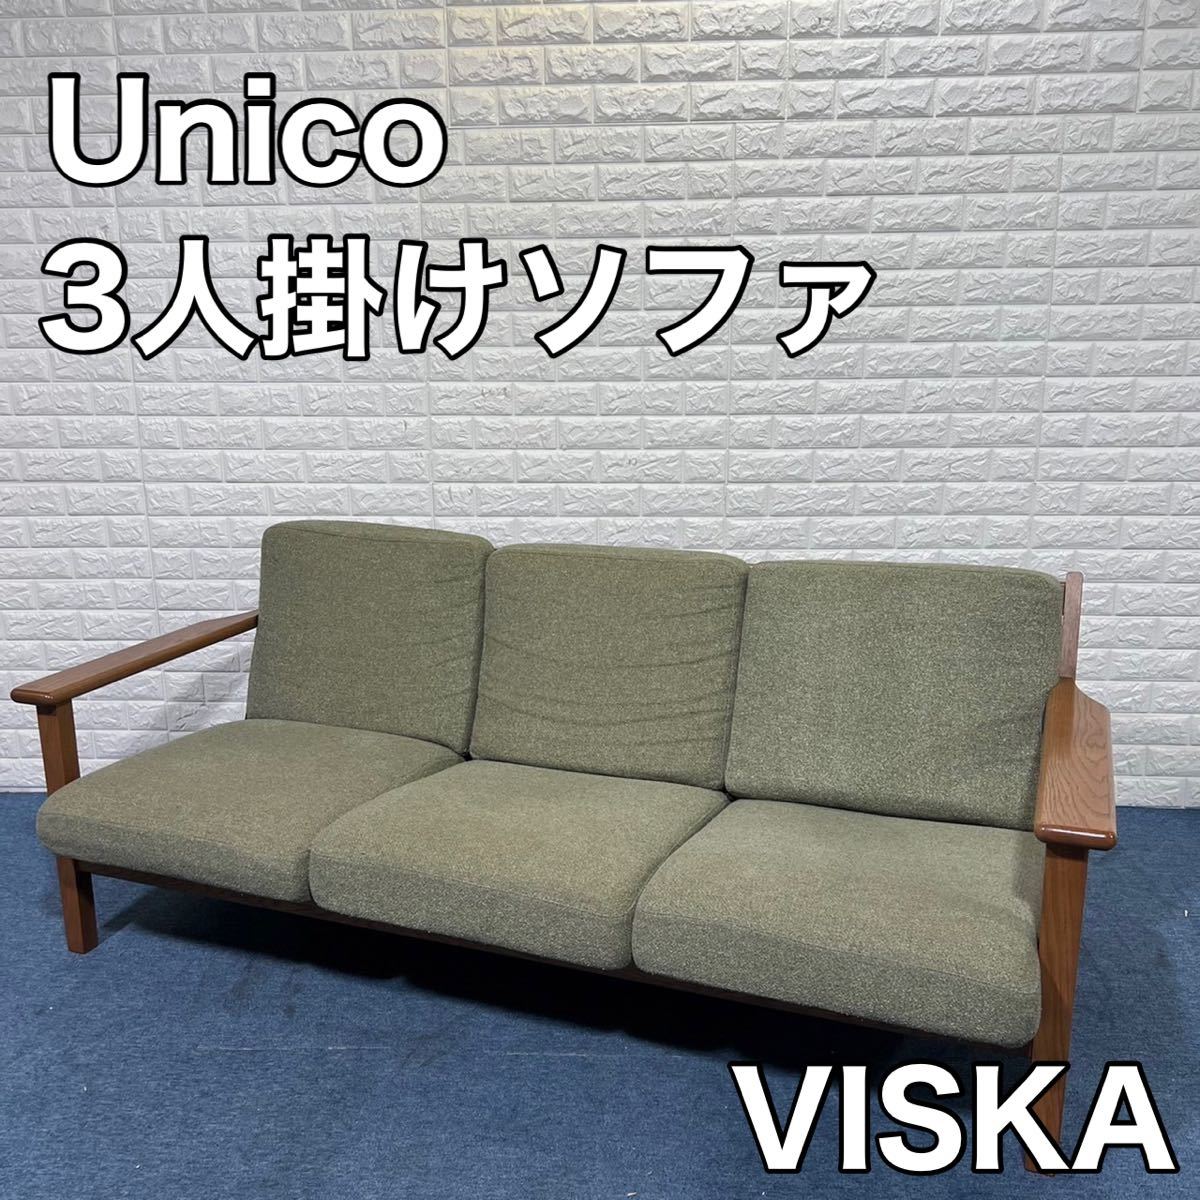 unico VISKA(ヴィスカ) カバーリングソファ 3シーター ナチュラル-